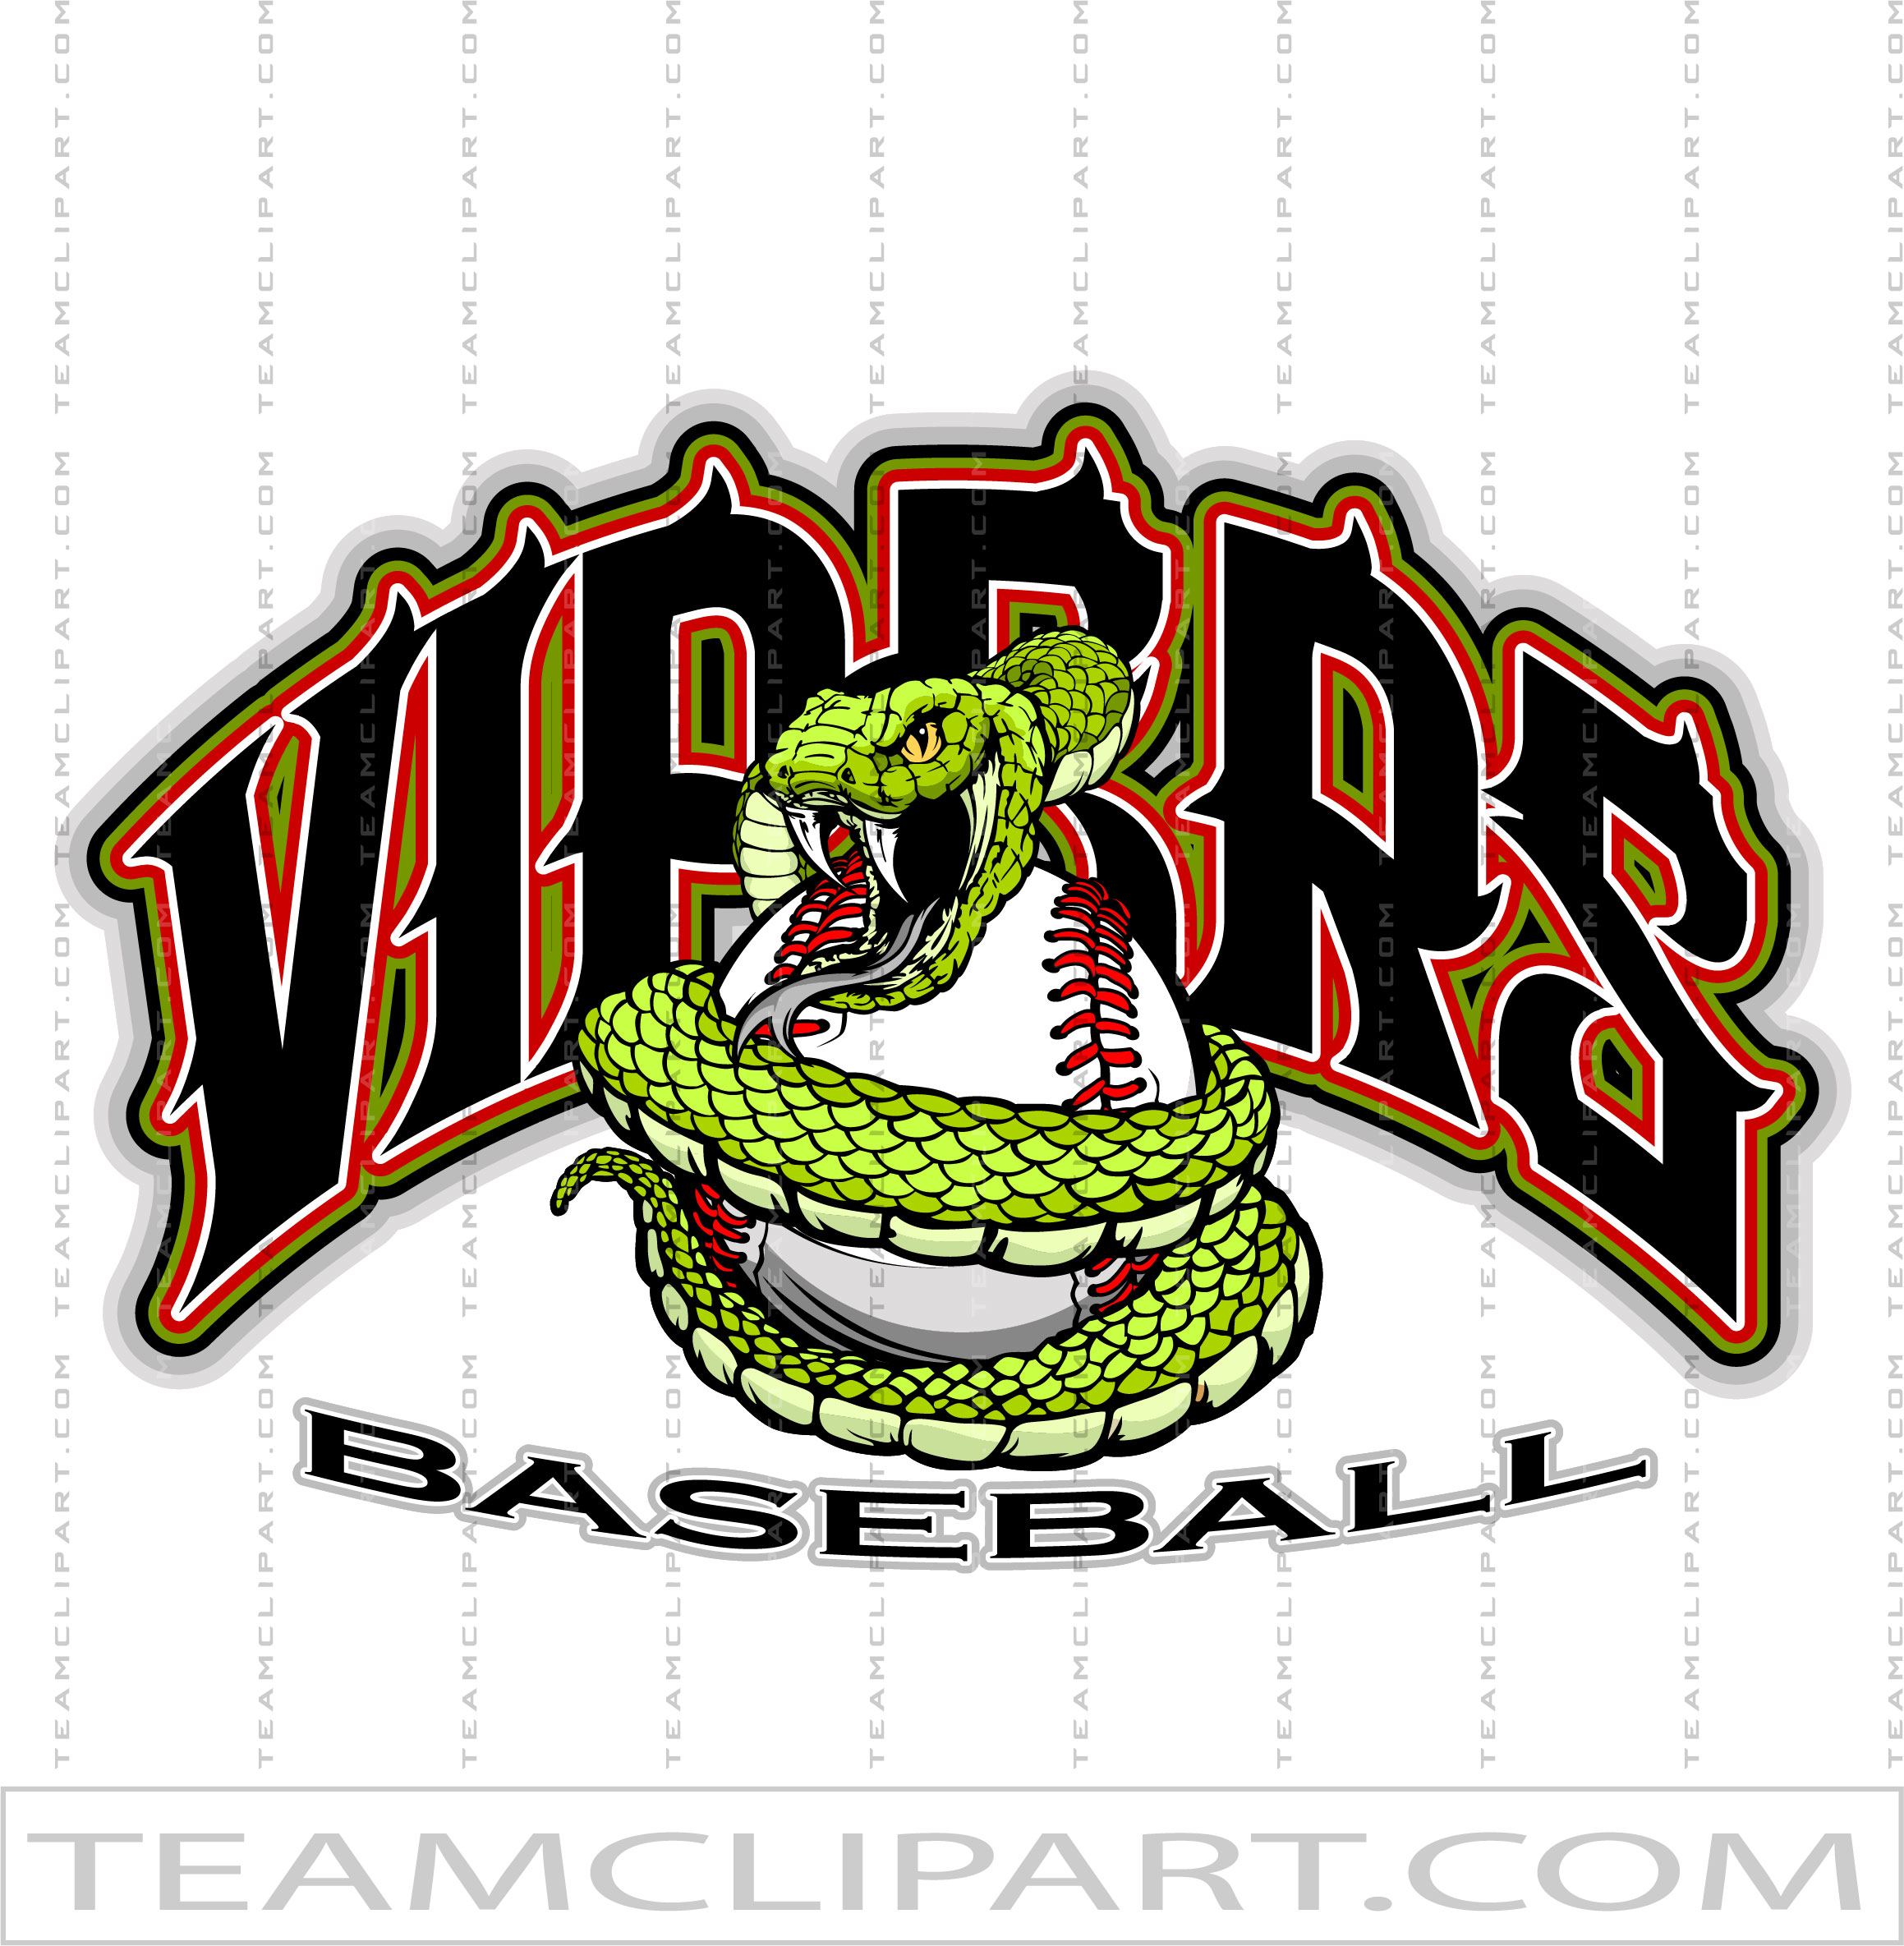 Baseball Viper